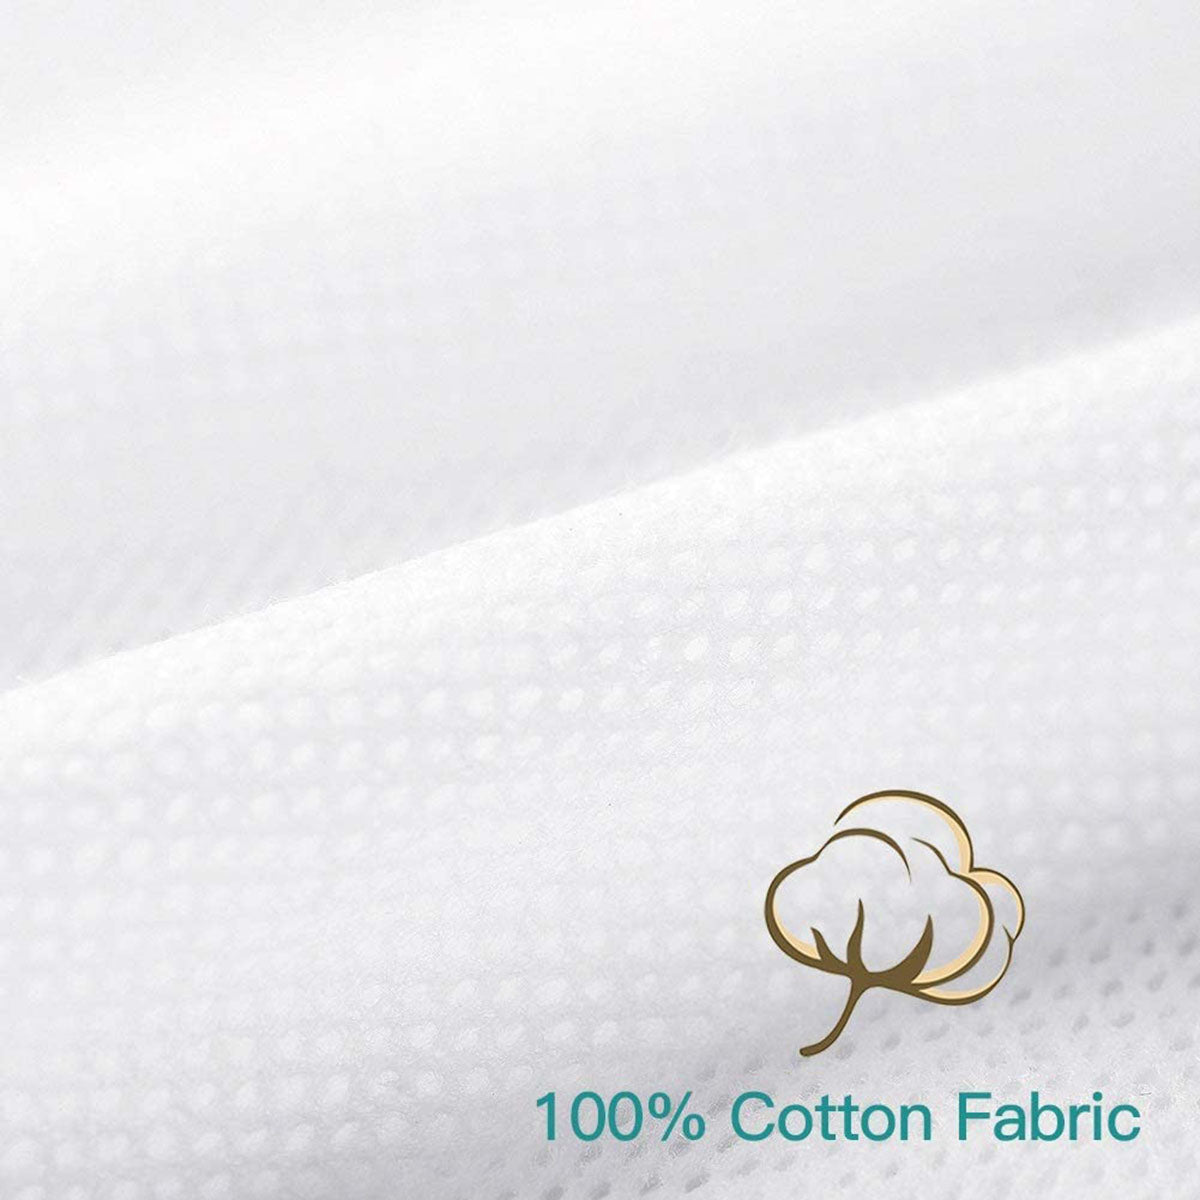 Winner large size alcohol prep pads 100% cotton fabric